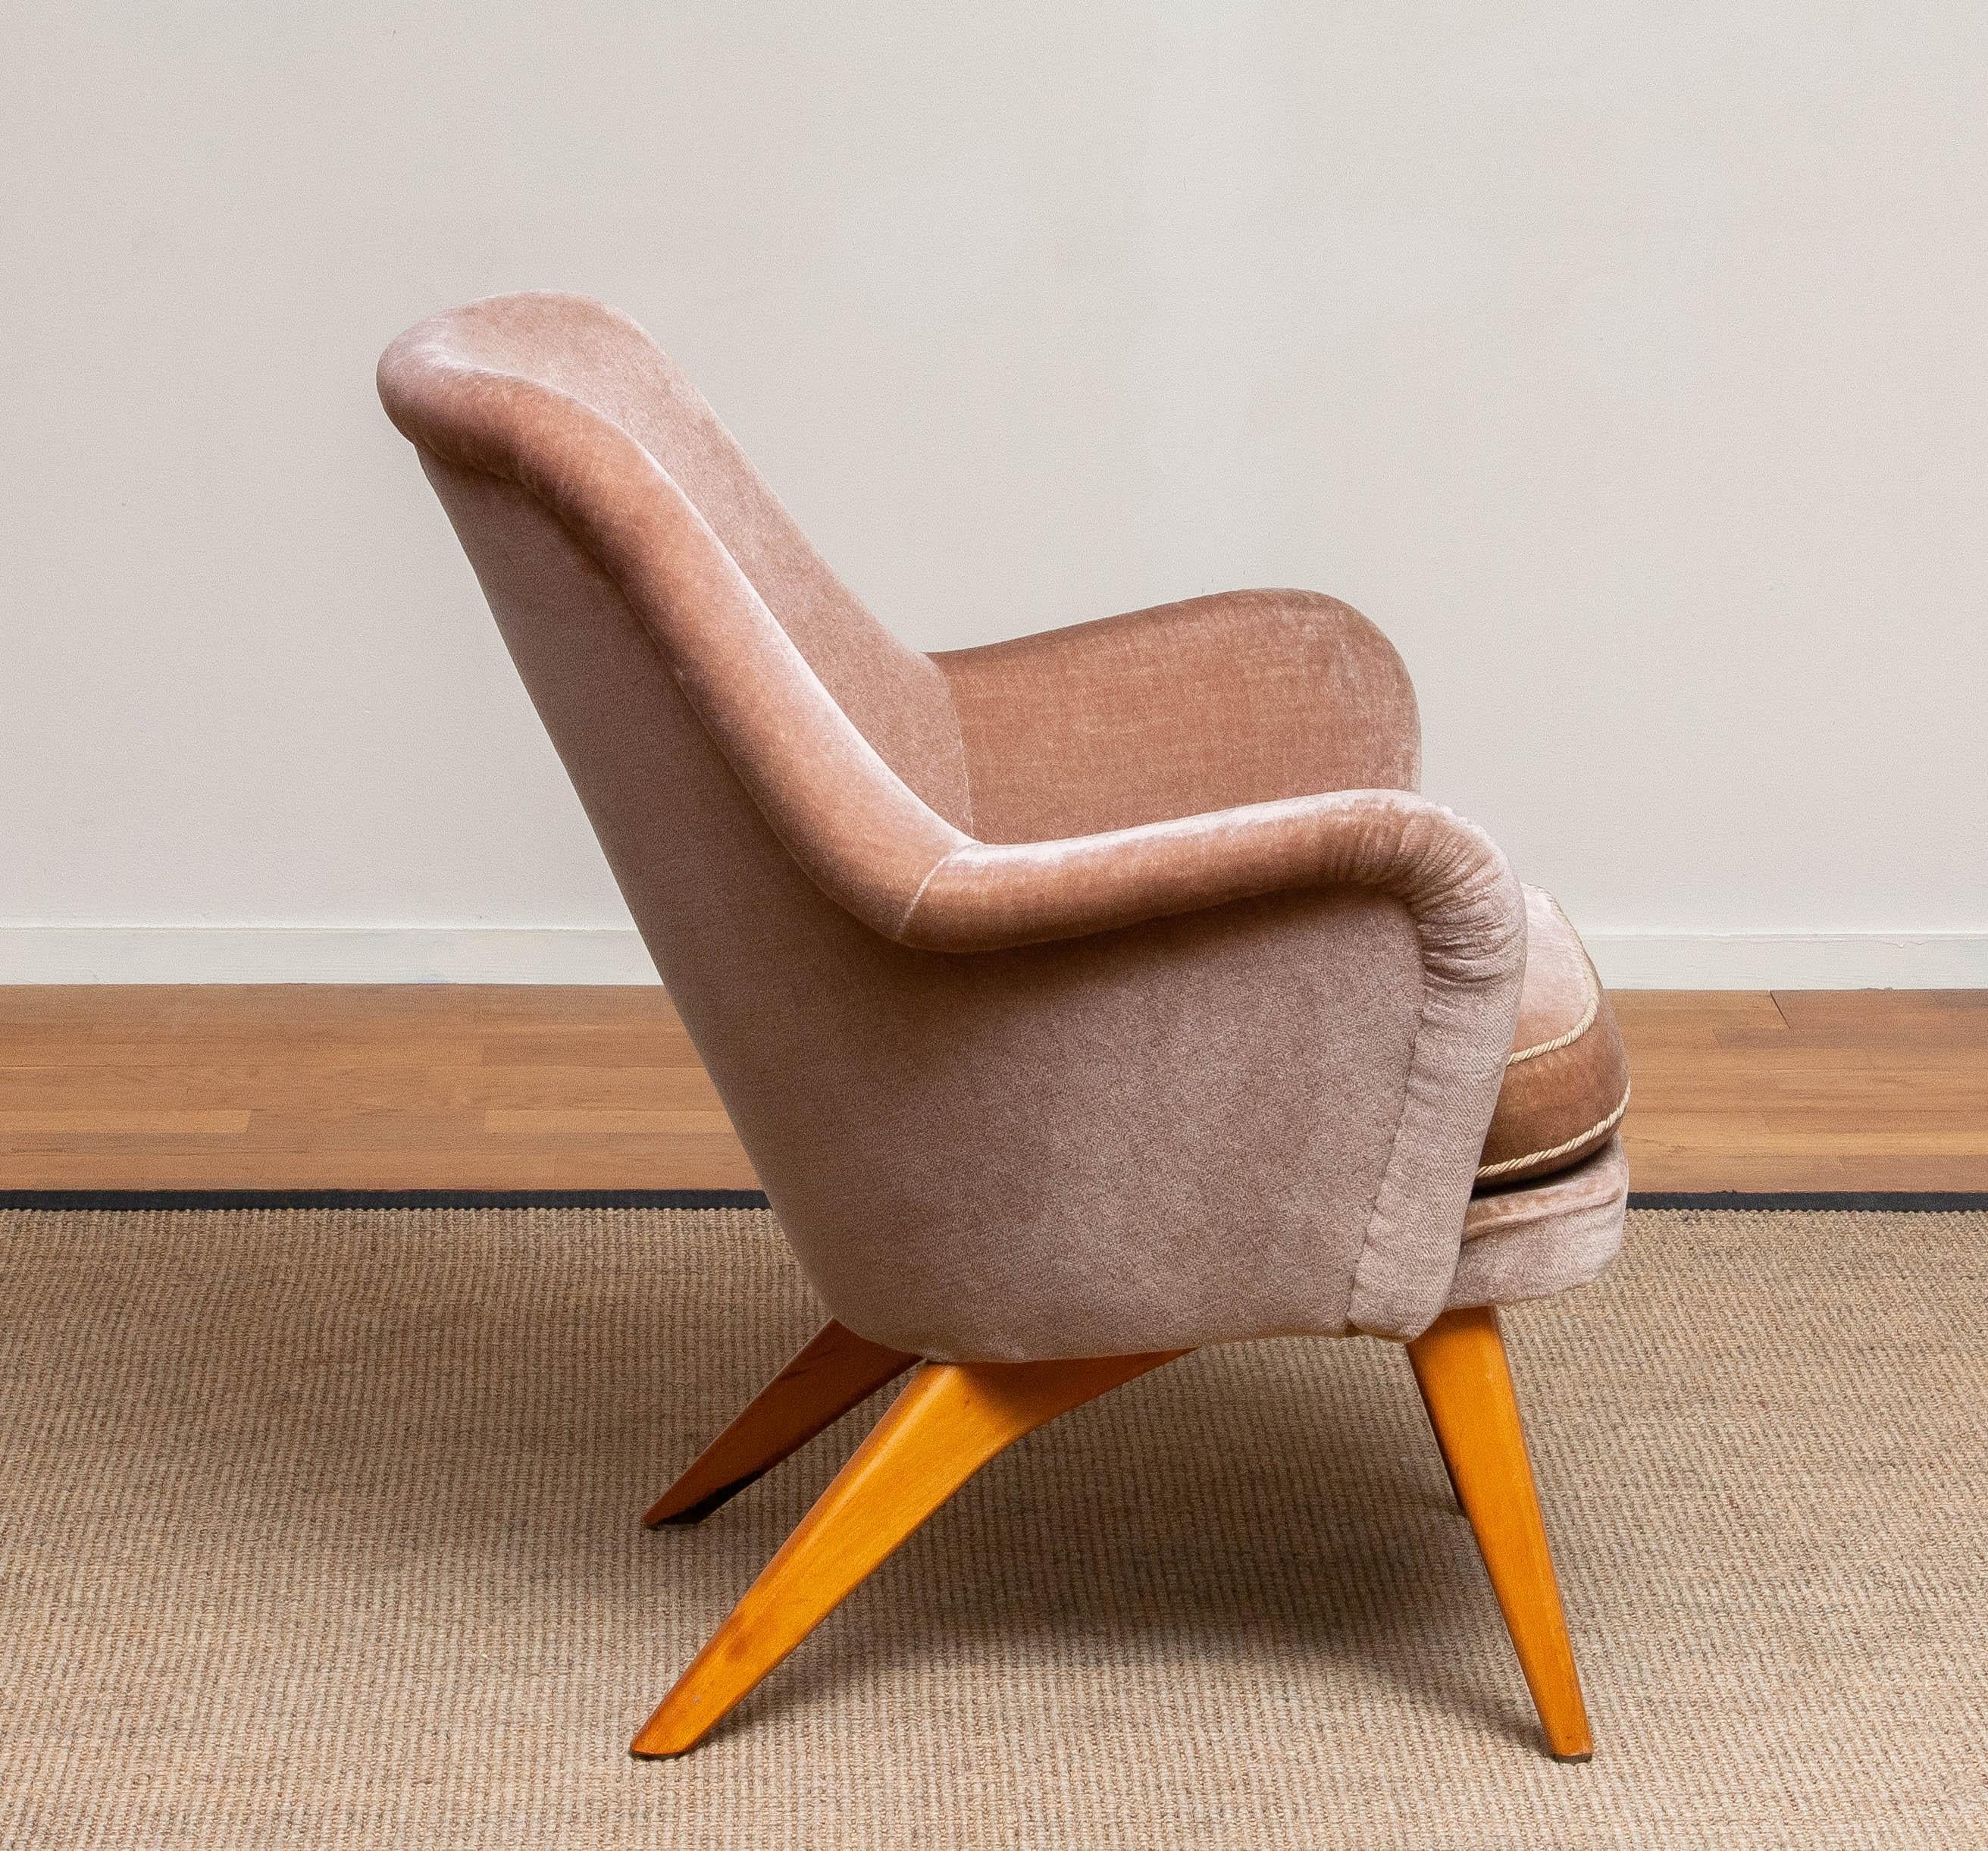 Mid-Century Modern 1950s Pedro Chair by Carl Gustav Hiort af Ornäs for Puunveisto Oy-Trasnideri